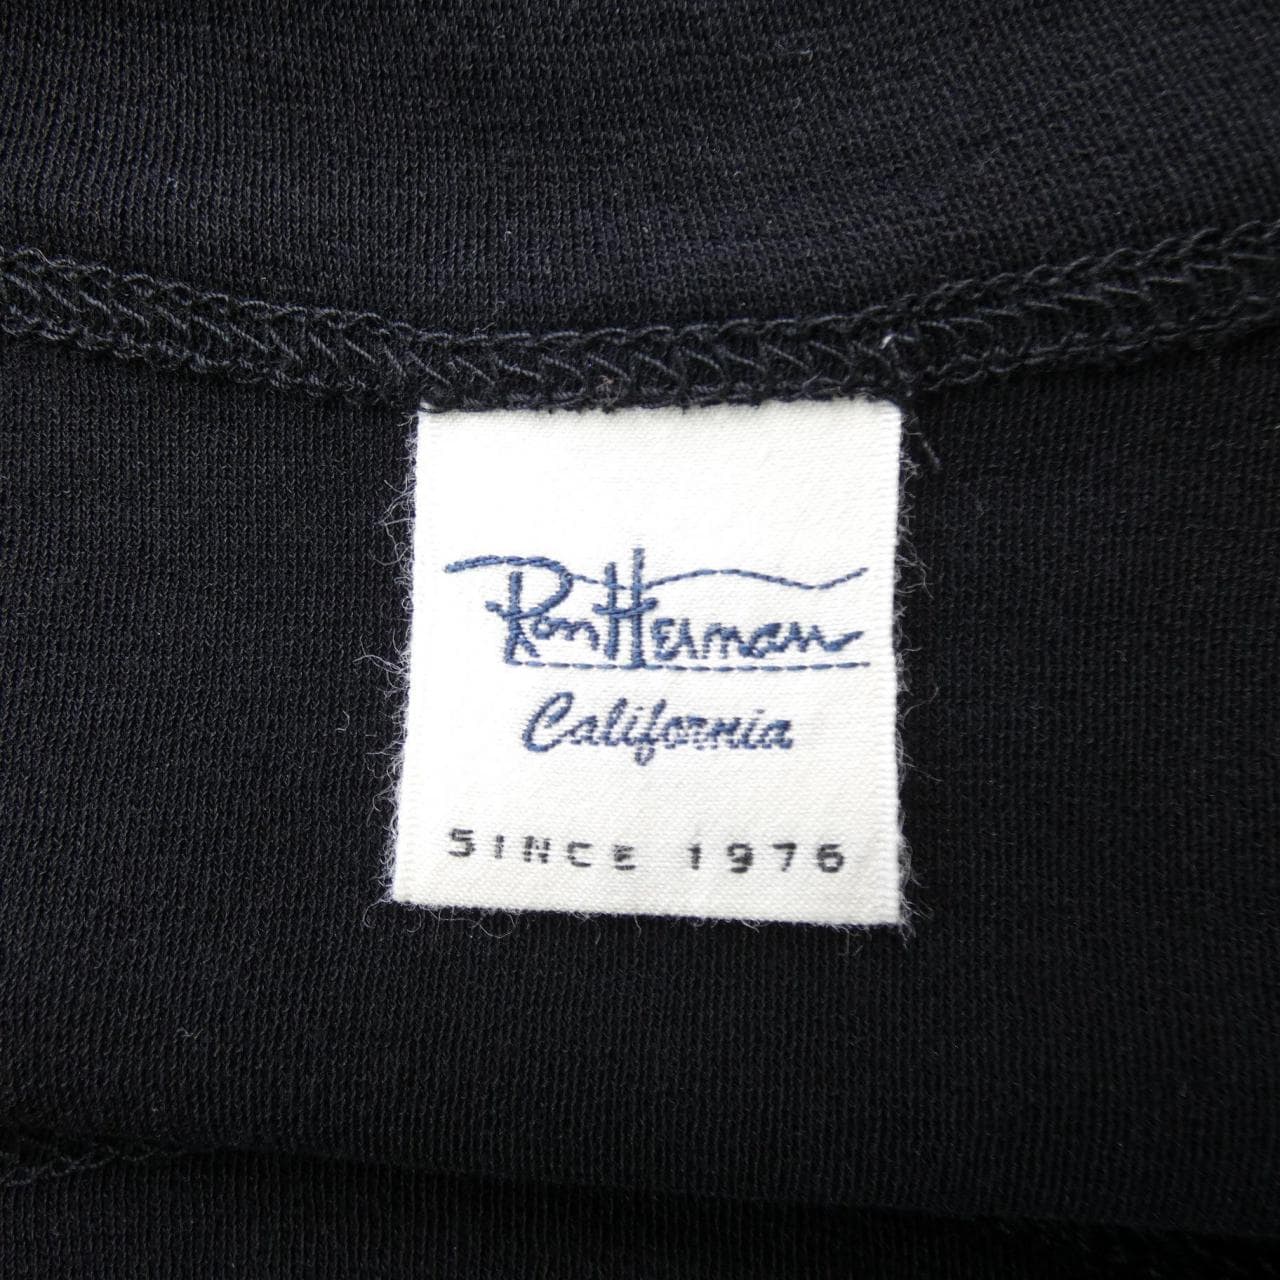 羅哈曼RON HERMAN T恤